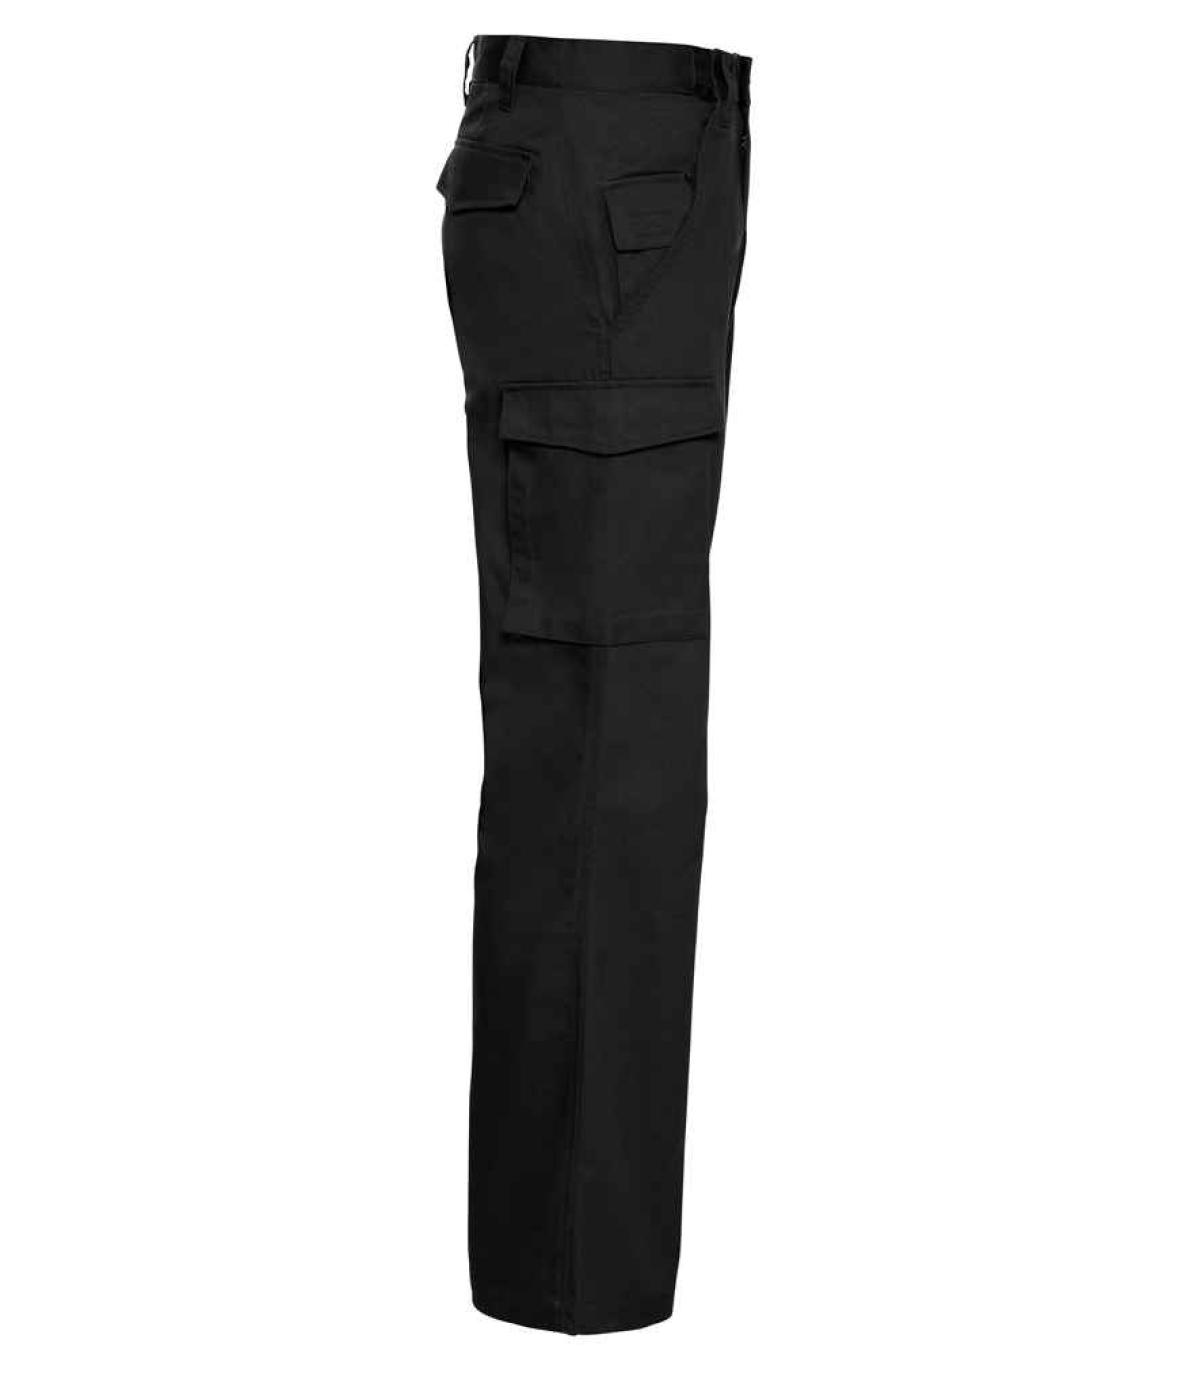 Russell Work Trousers - Black | Order Uniform UK Ltd